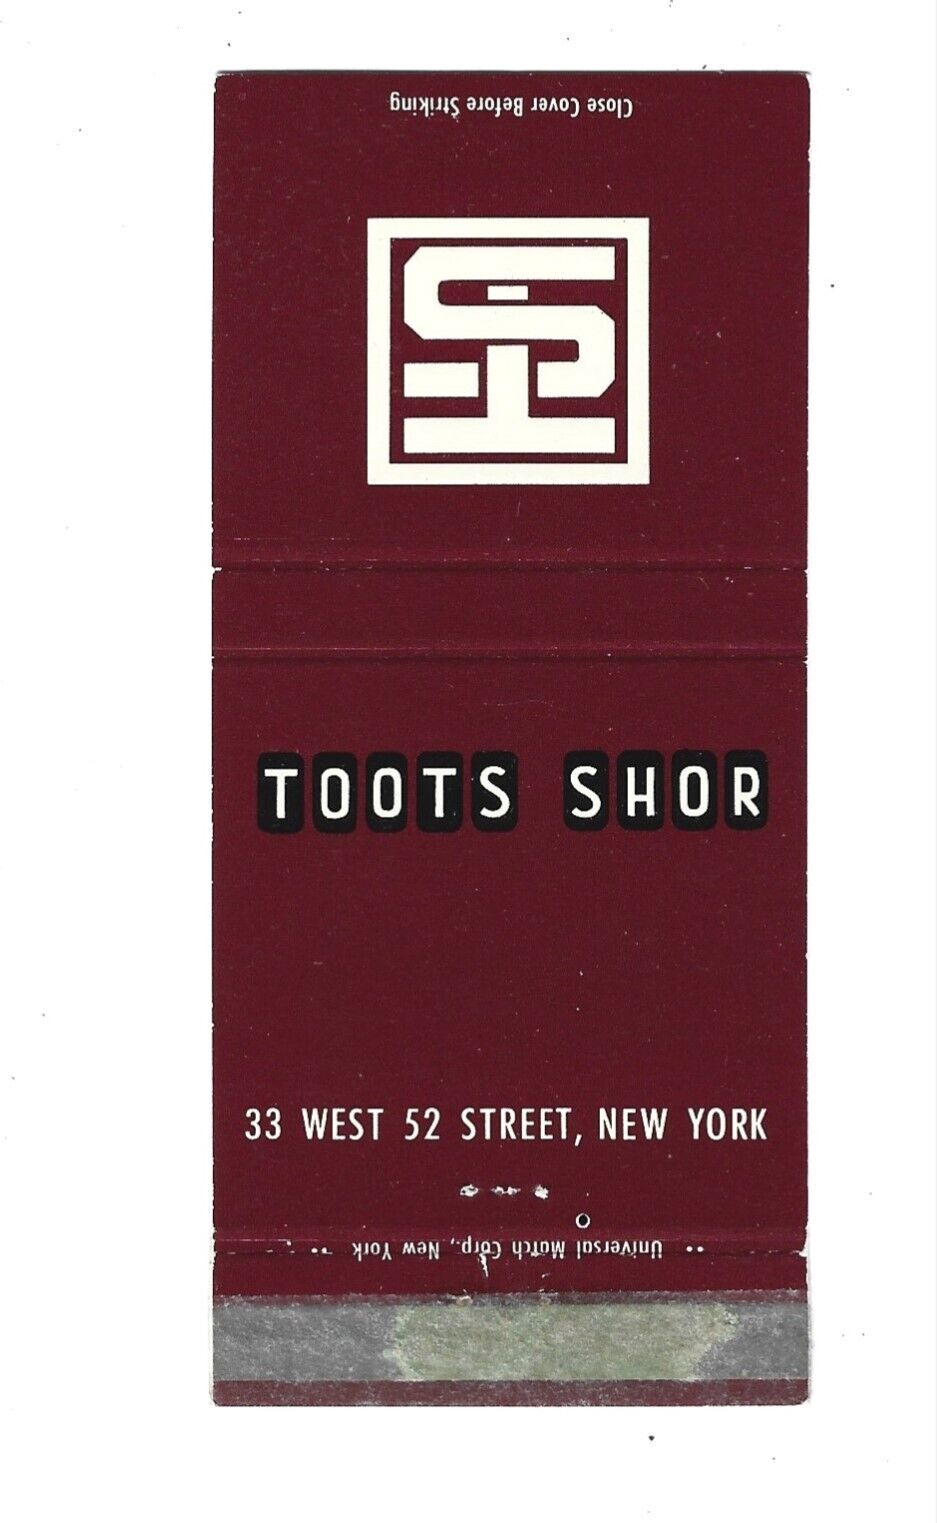 Toots Shor Restaurant - NYC Matchcover